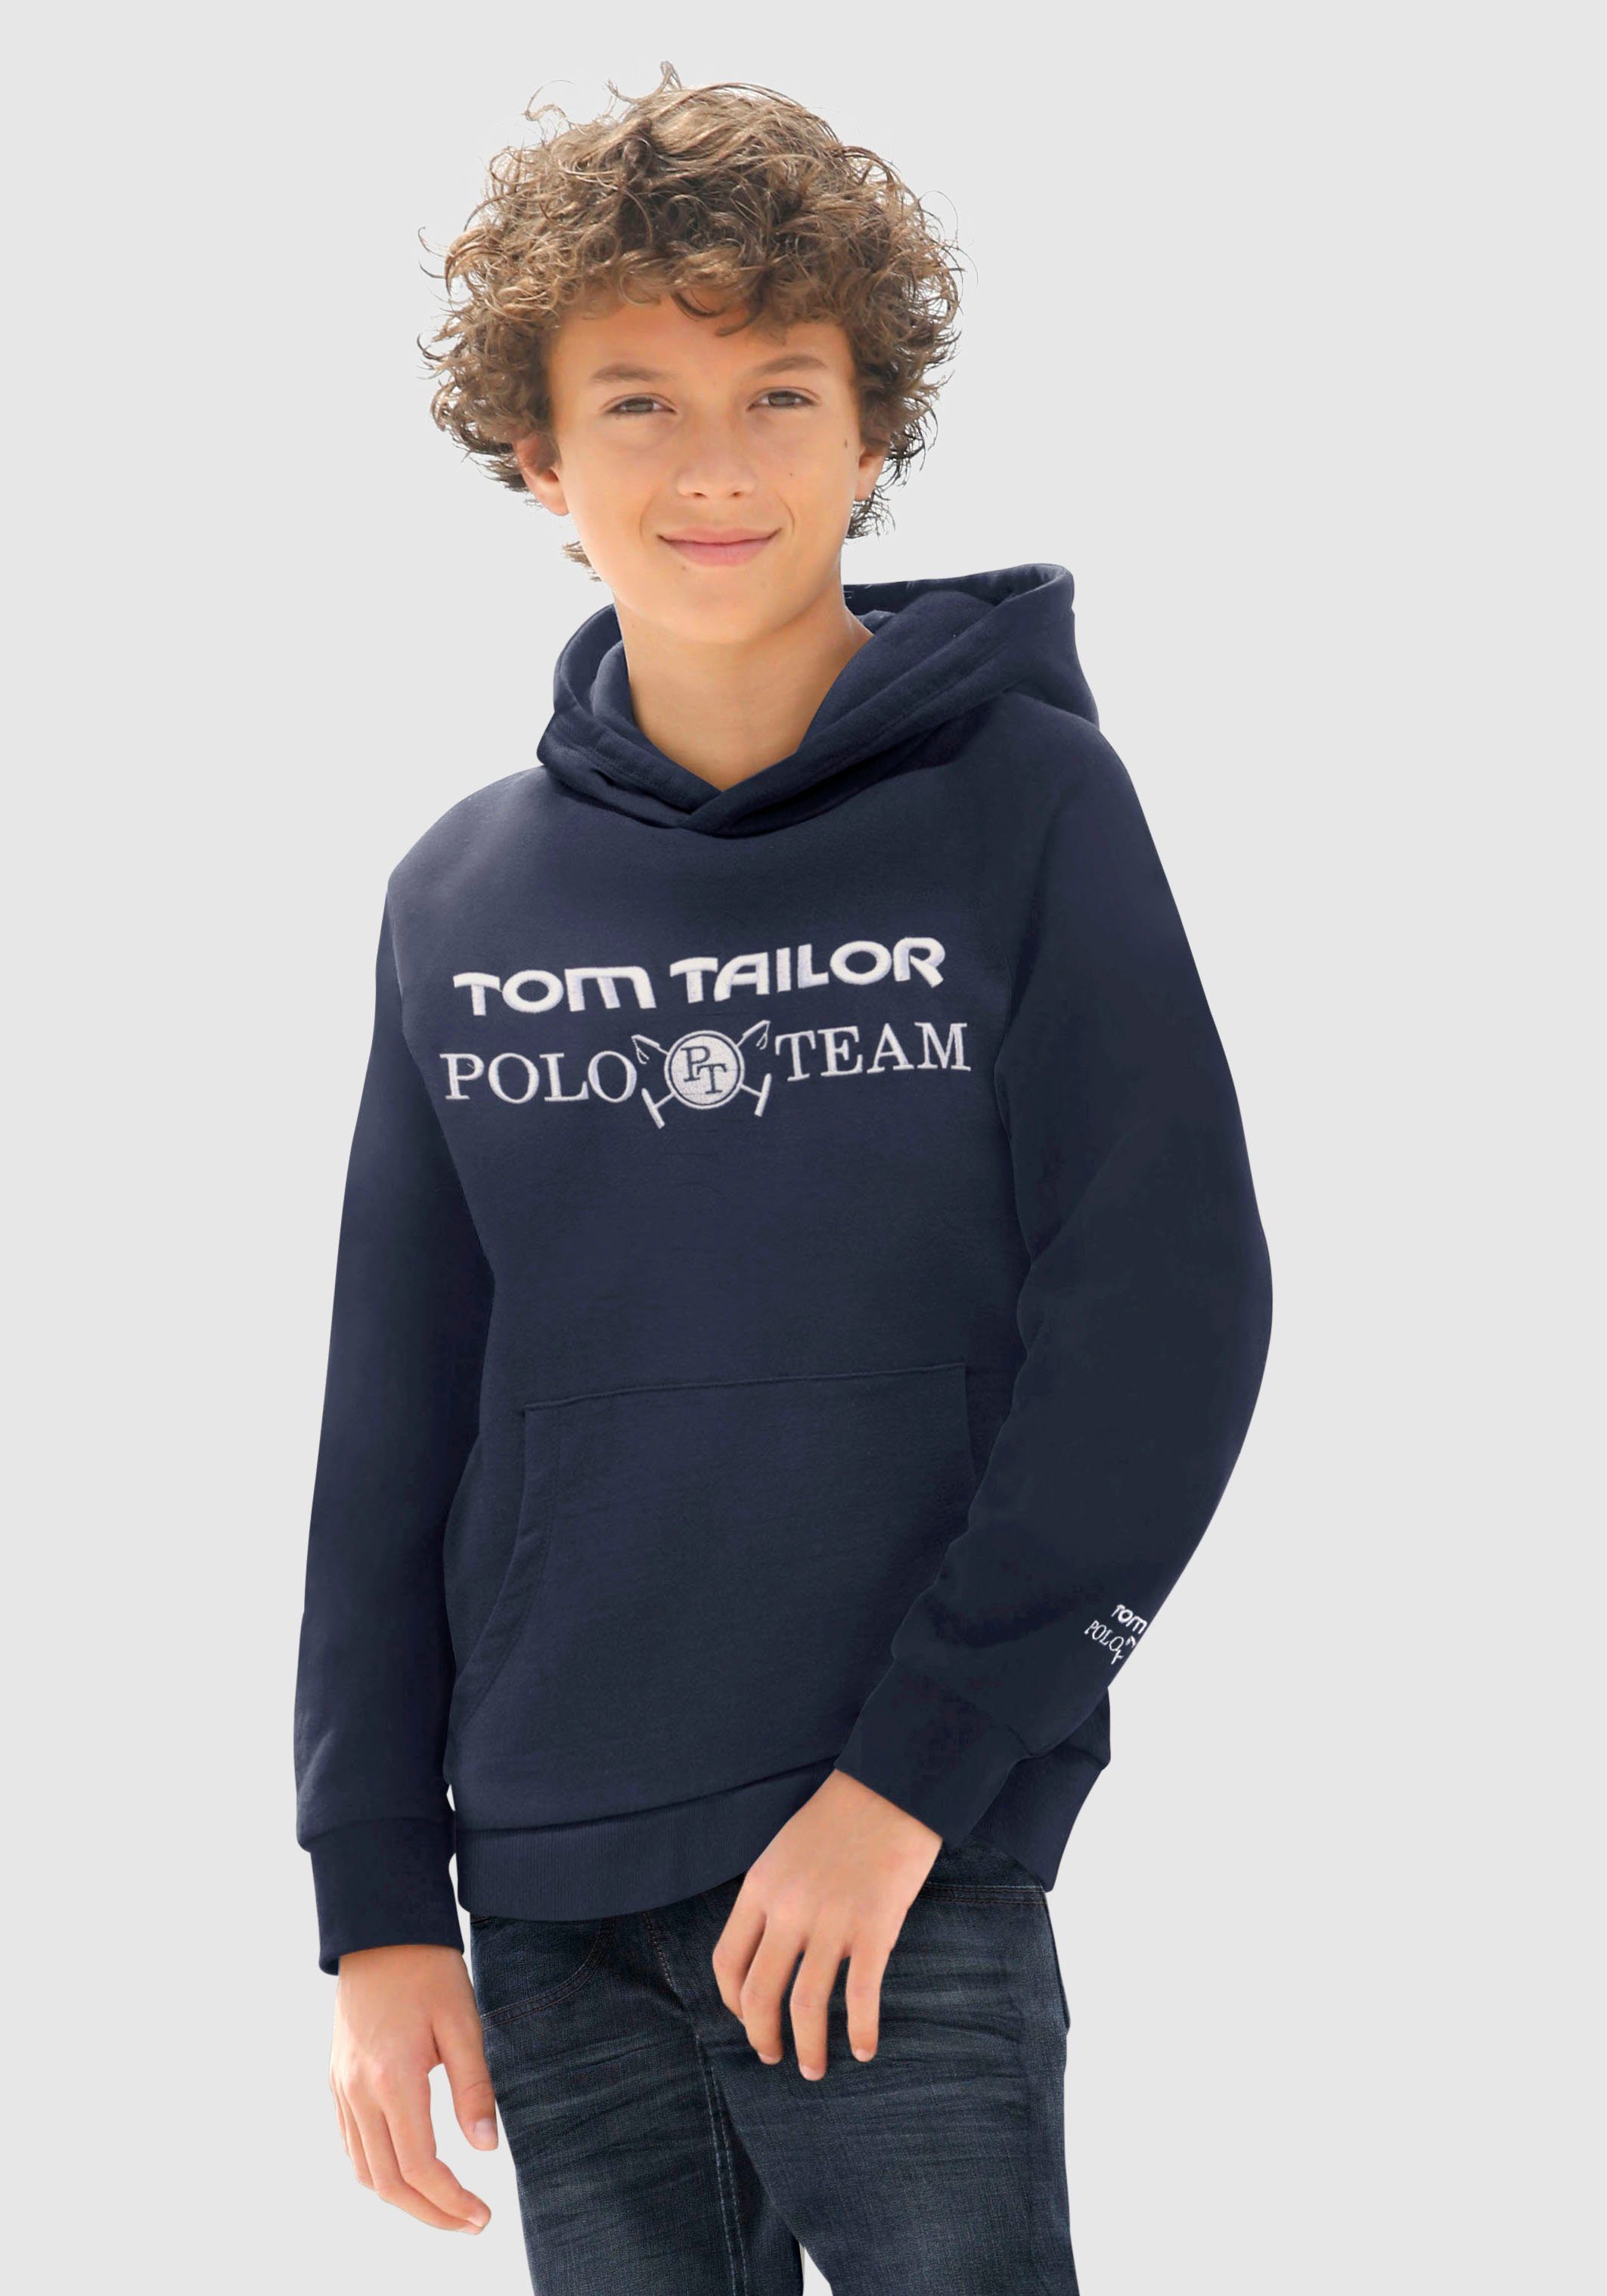 TOM TAILOR Polo Team Kapuzensweatshirt mit Stickereien online kaufen | OTTO